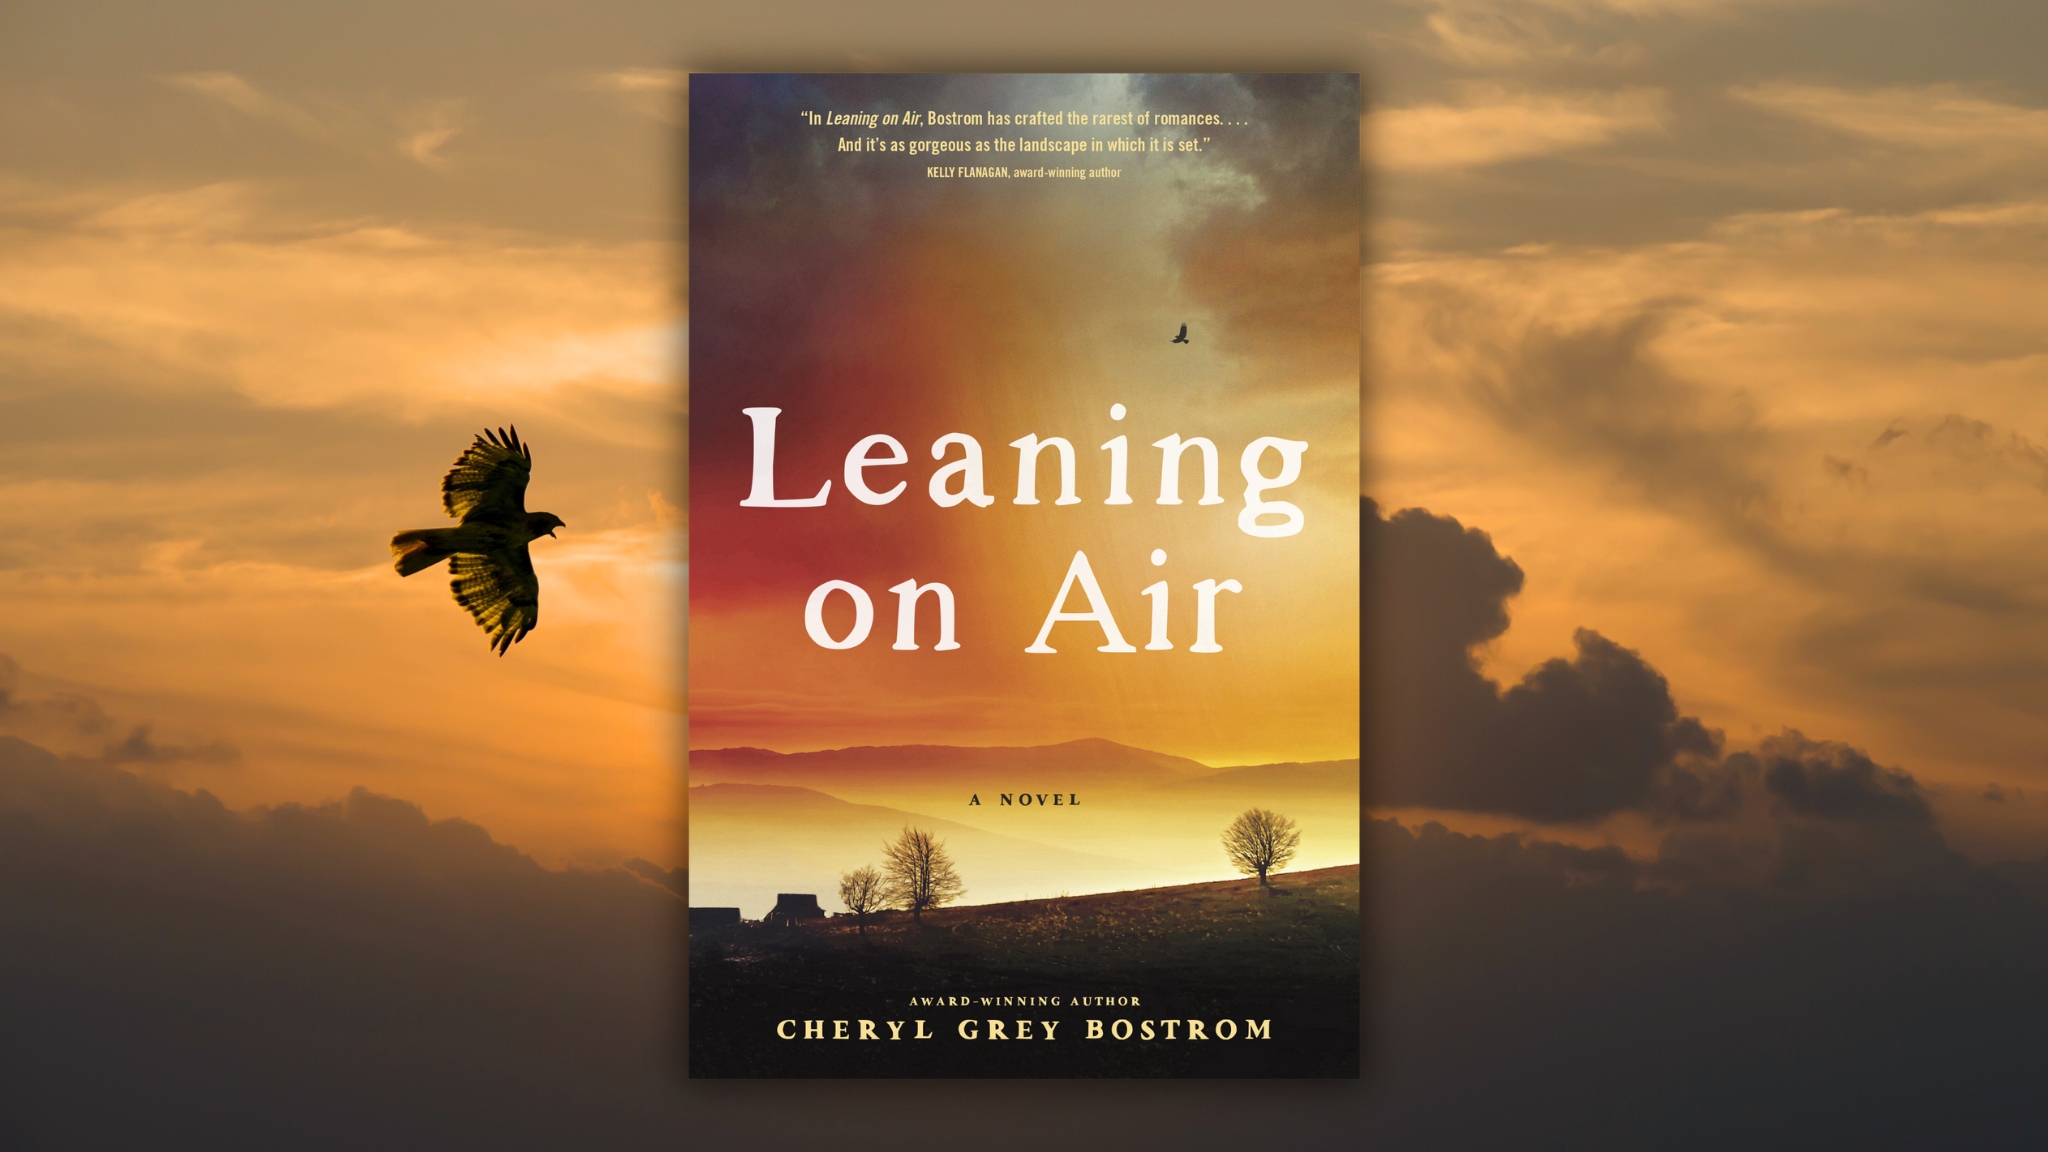 Leaning On Air by Cheryl Grey Bostrom